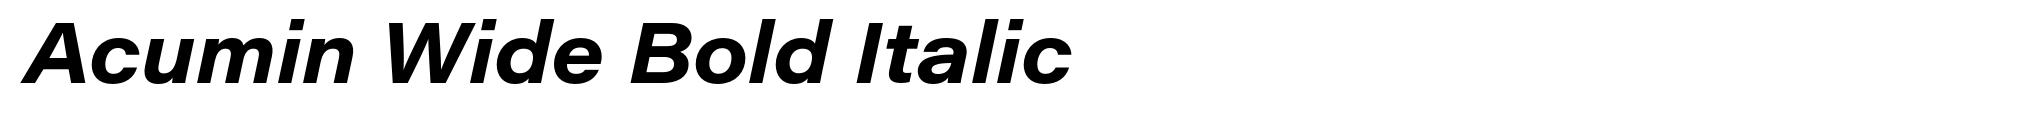 Acumin Wide Bold Italic image